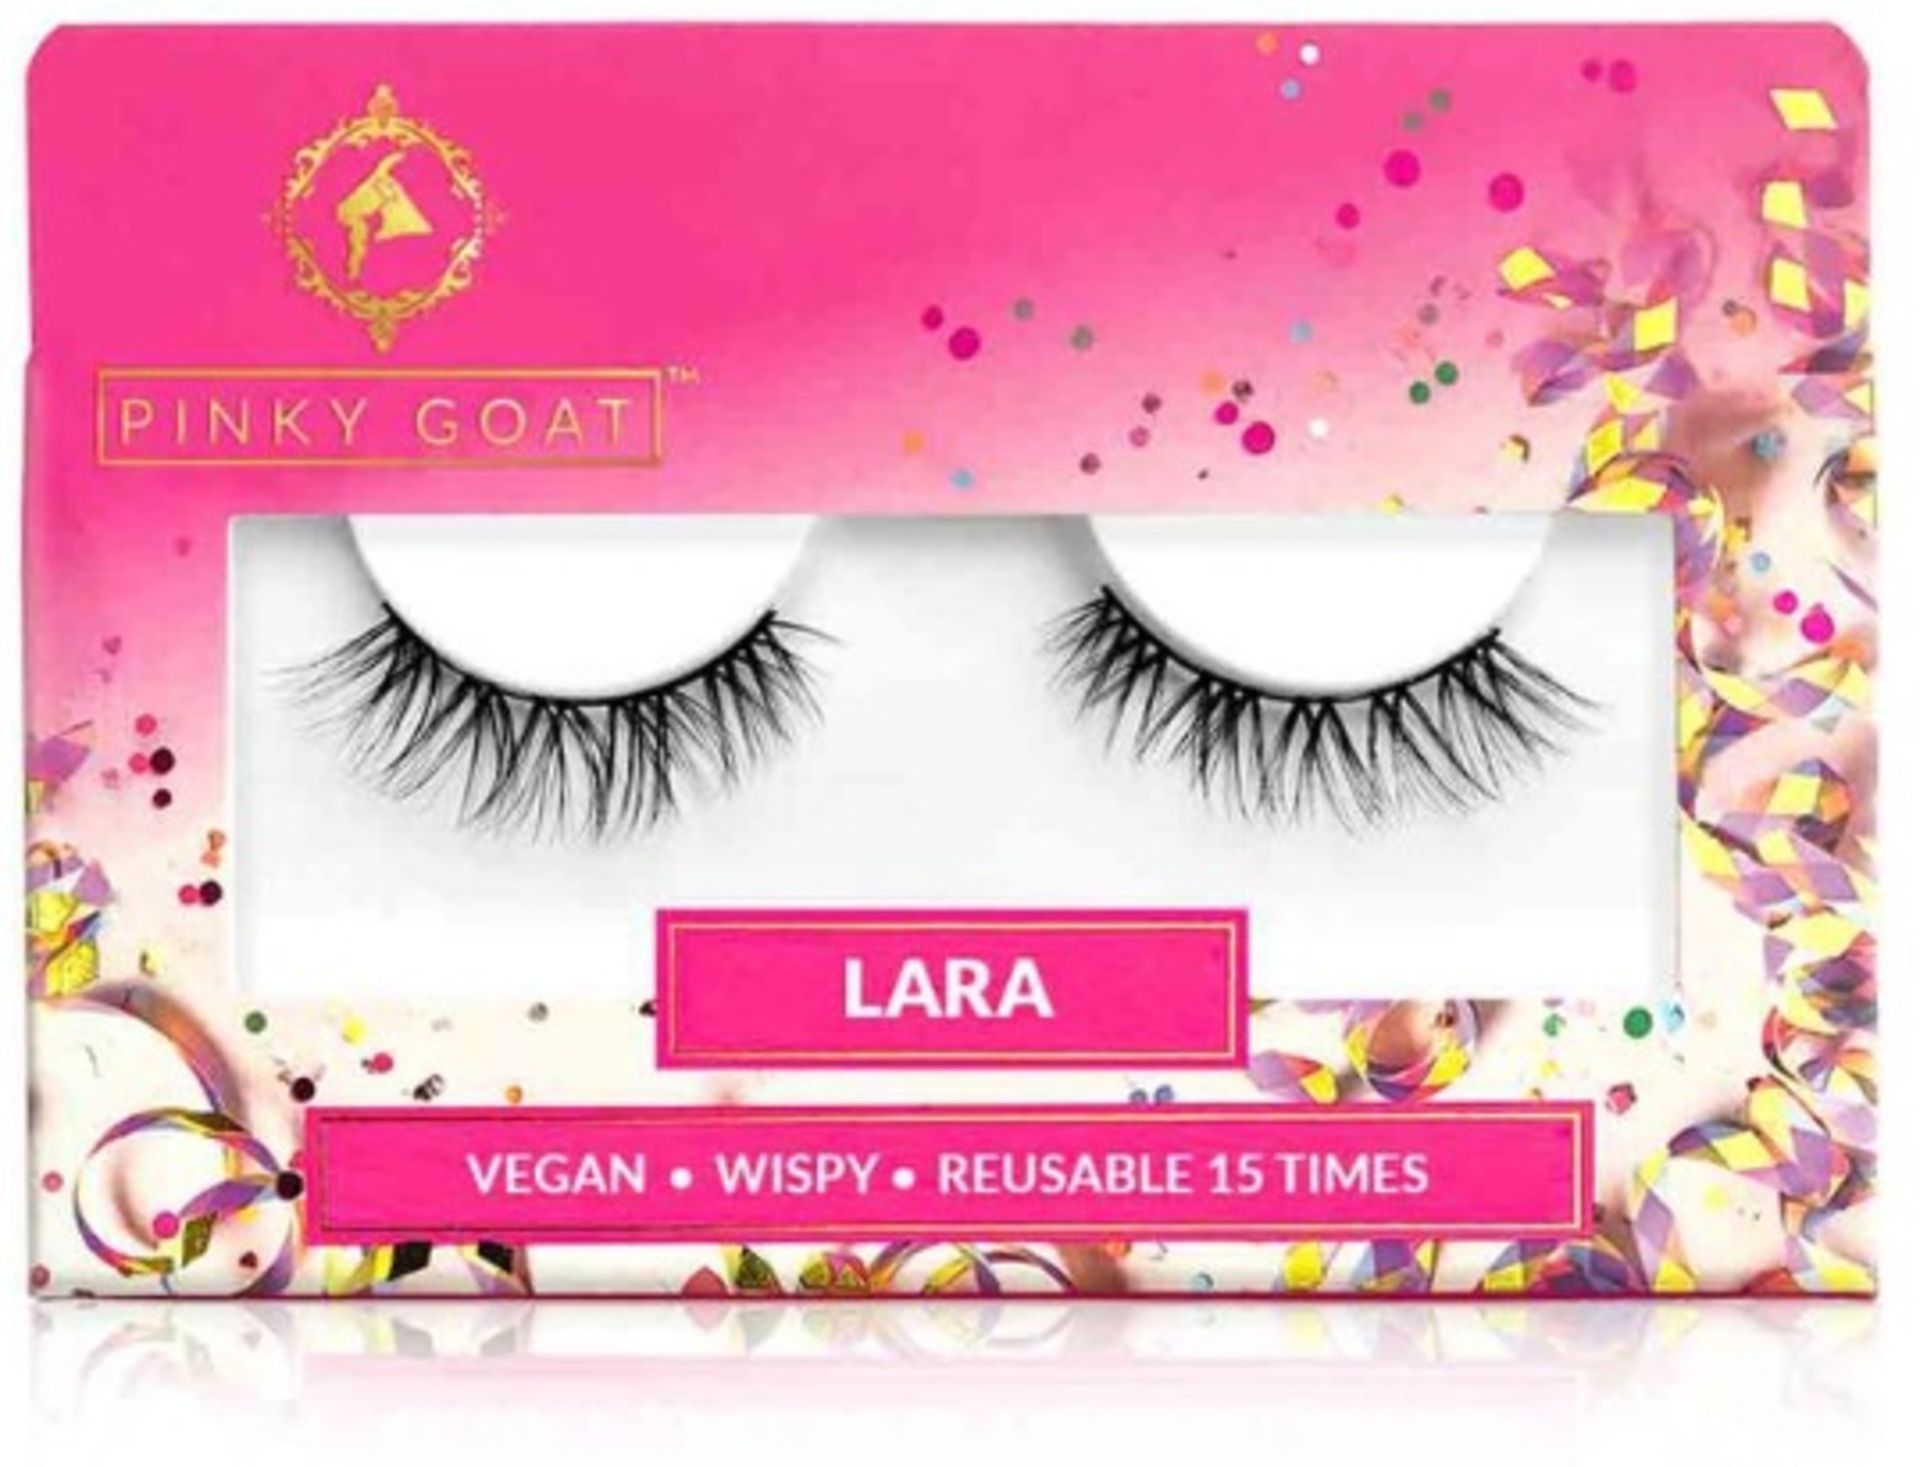 Box of 162 x Pinky Goat eyelashes - LARA Natural Vegan Lashes - RRP £1782